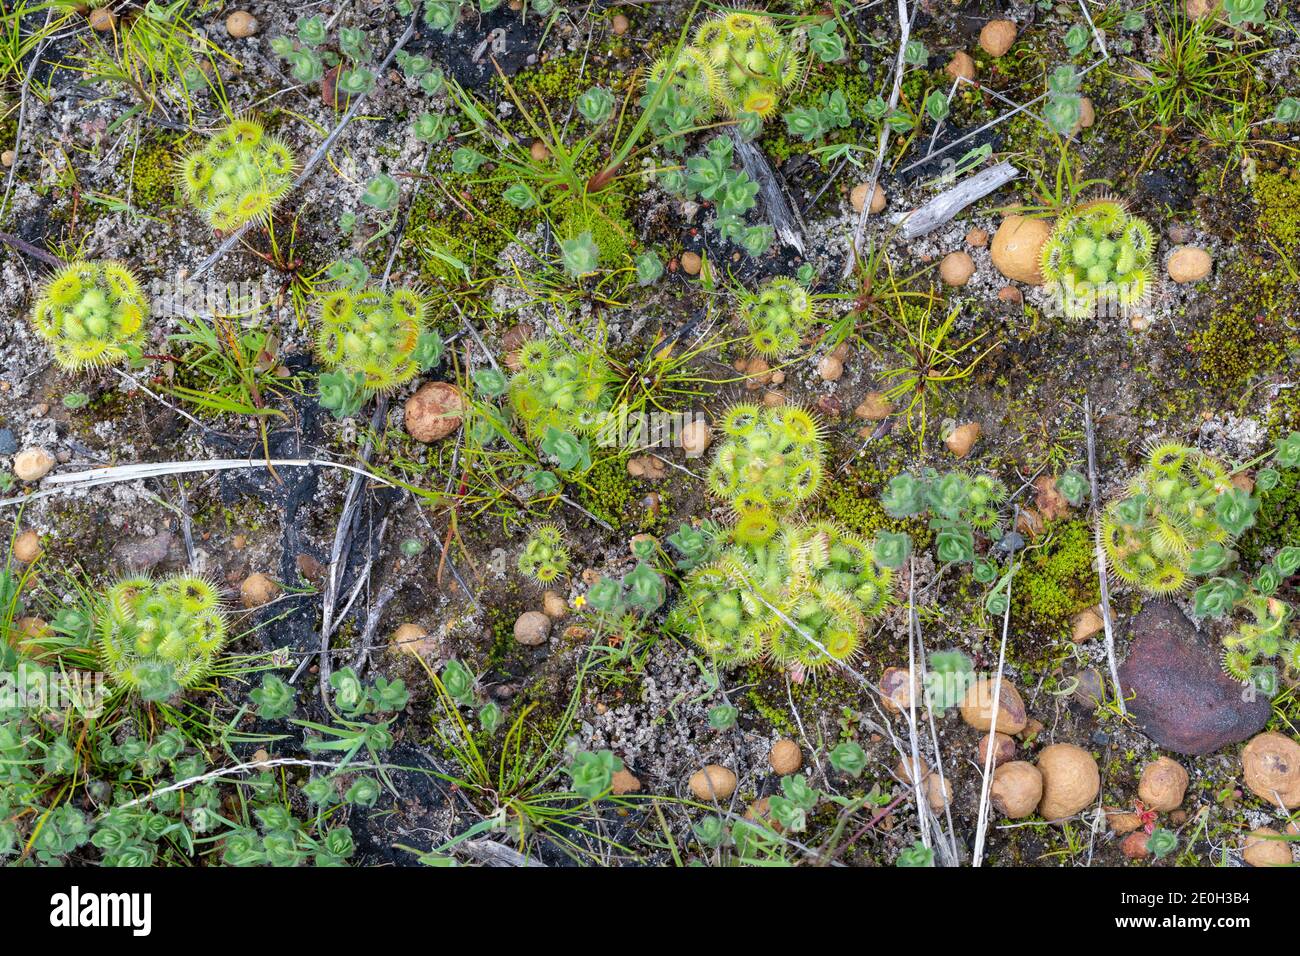 green rosettes of Drosera glanduligera in natural habitat east of Bunbury in Western Australia, view from above Stock Photo